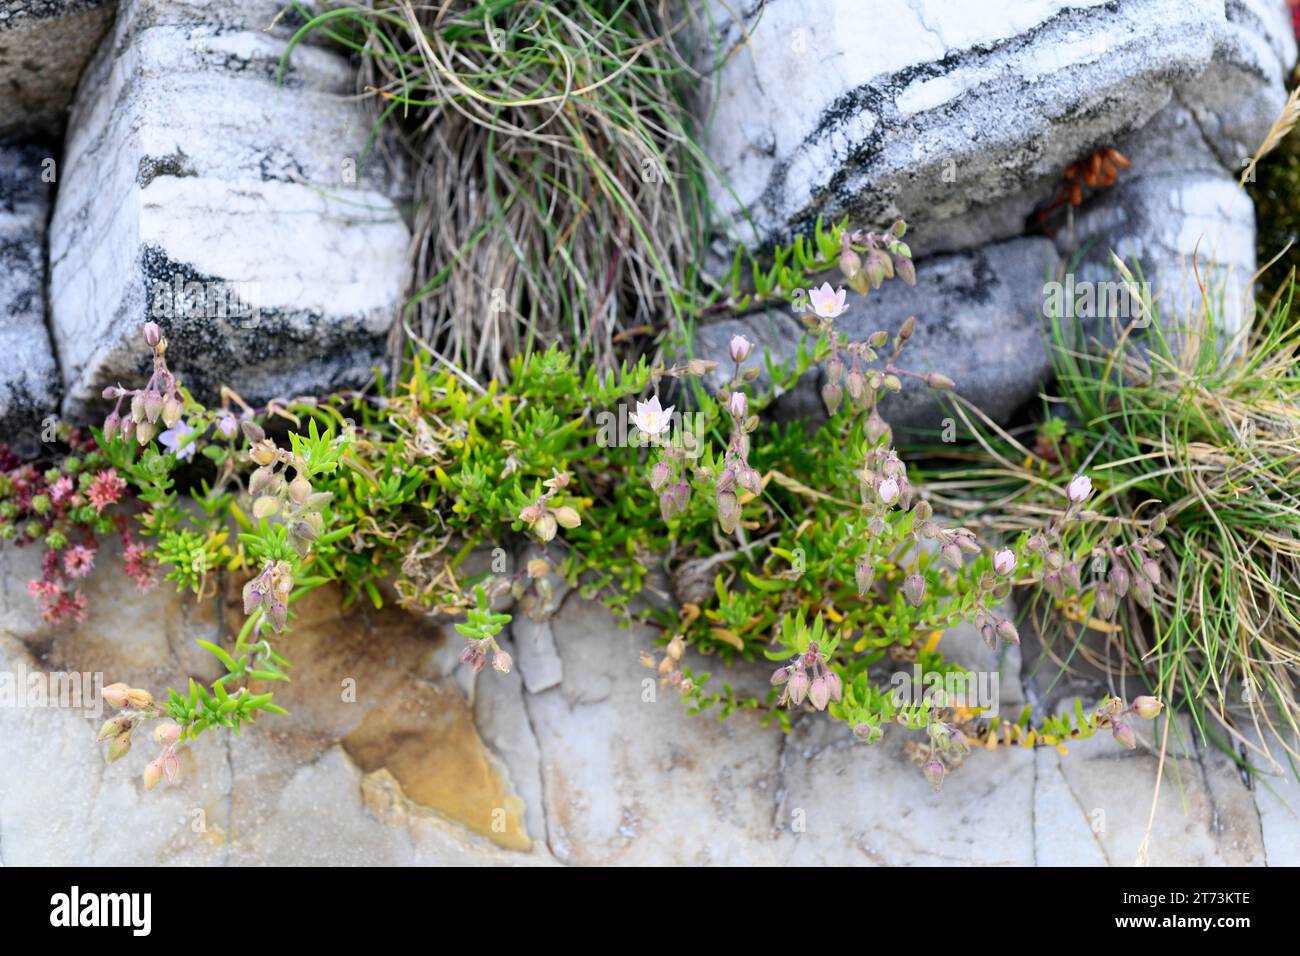 Spergularia rupicola is a perennial plant native to atlantic coasts of Europe. This photo was taken in Cabo de Penas, Asturias, Spain. Stock Photo